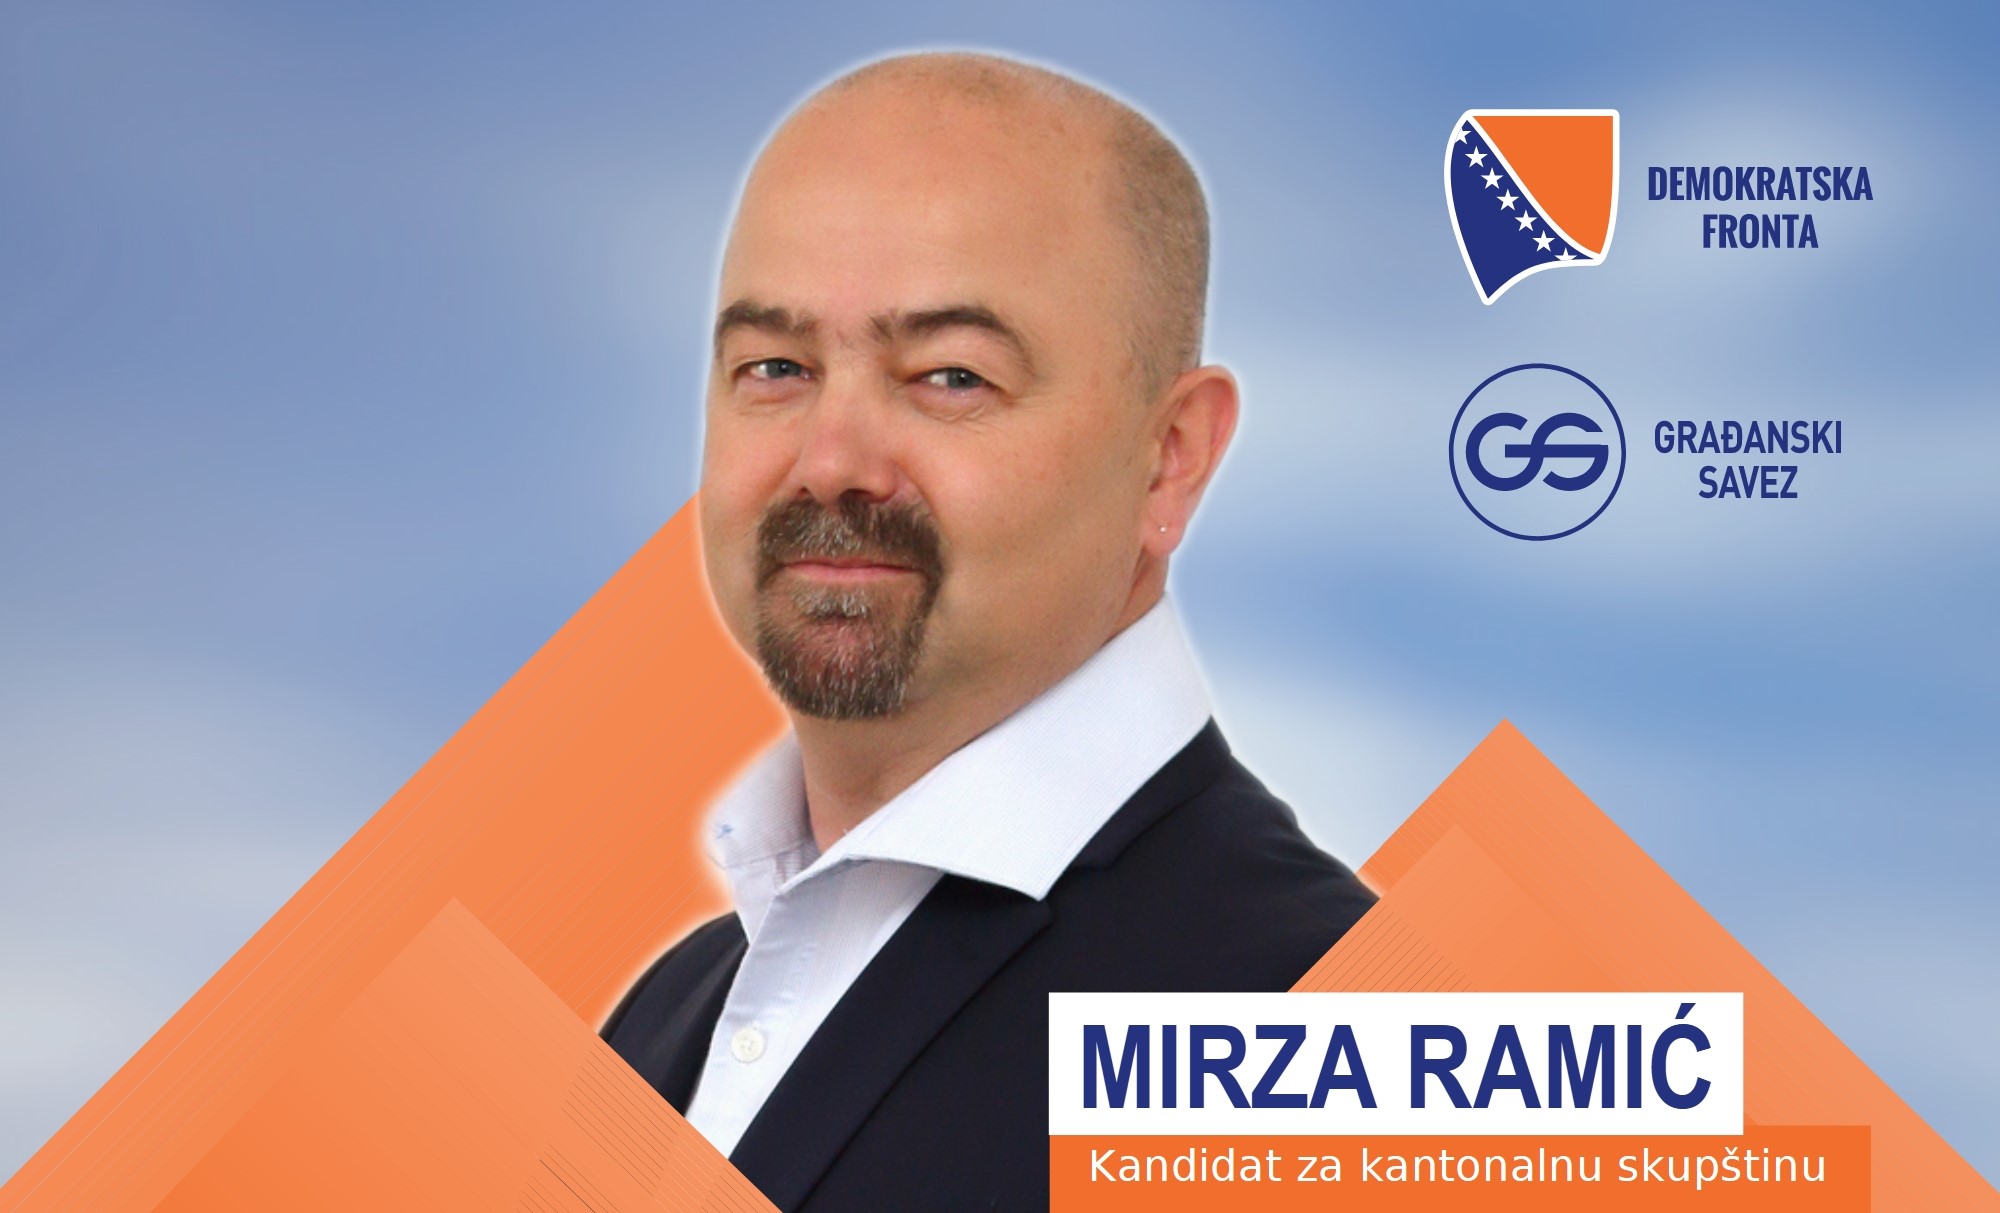 Predstavljamo naše kandidate: Mirza Ramić